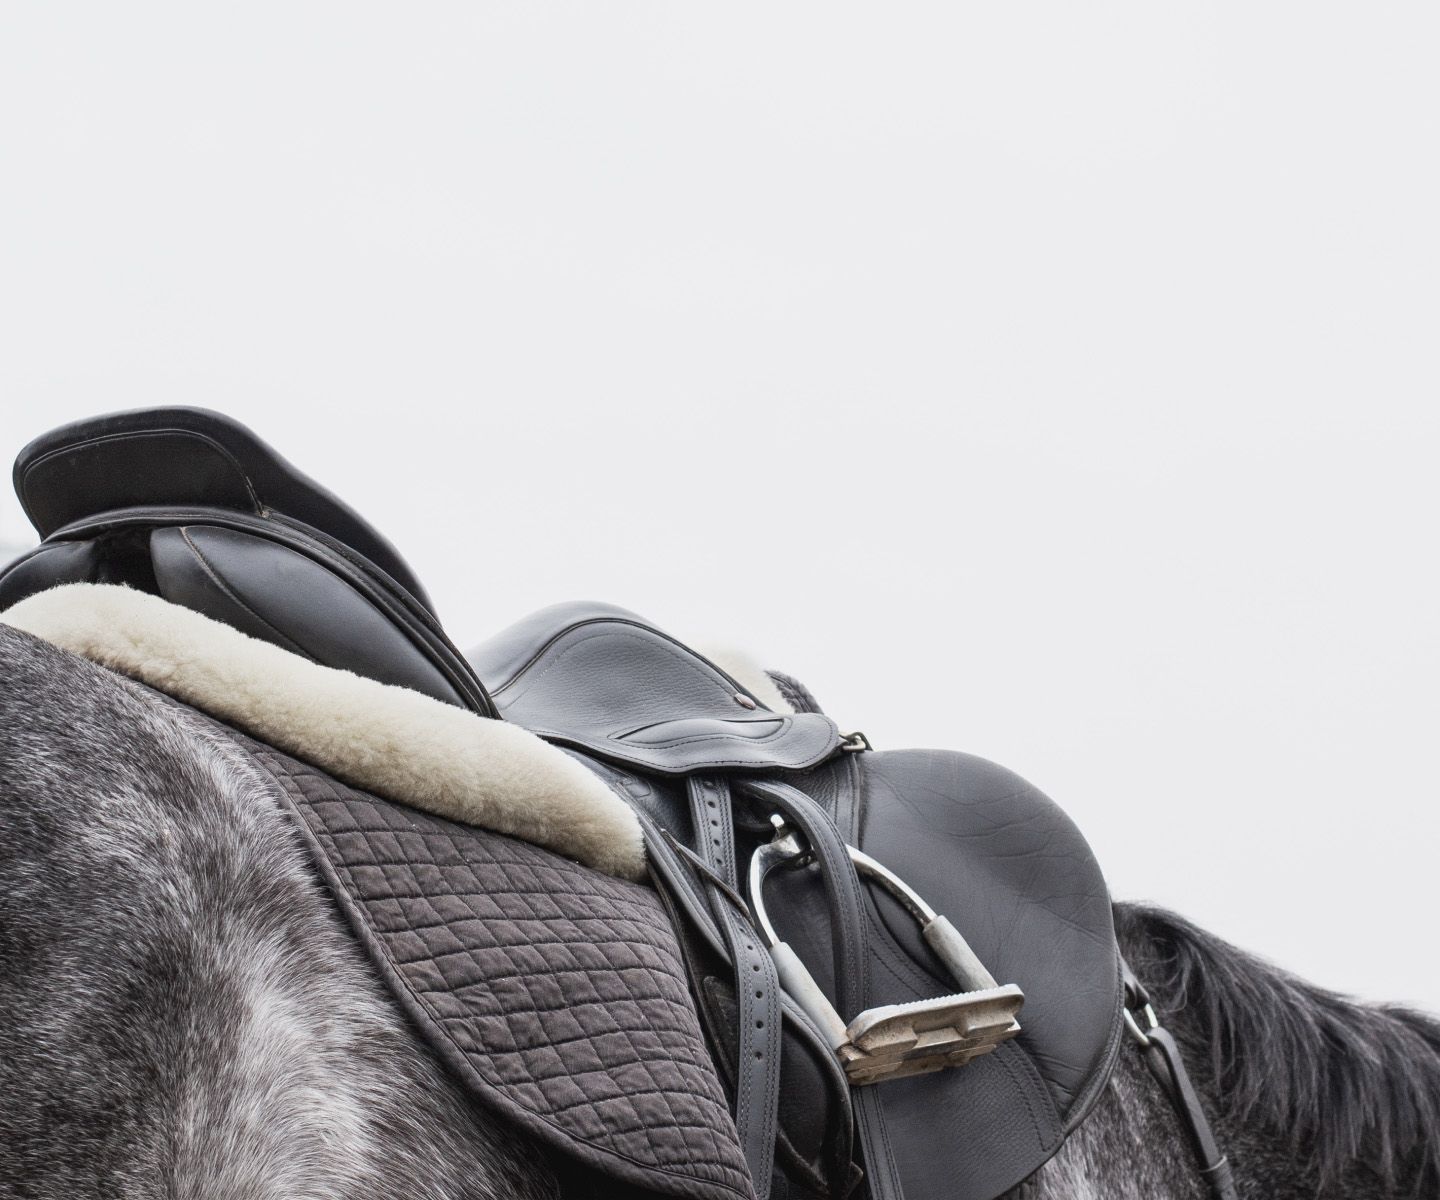 Close up of leather saddle